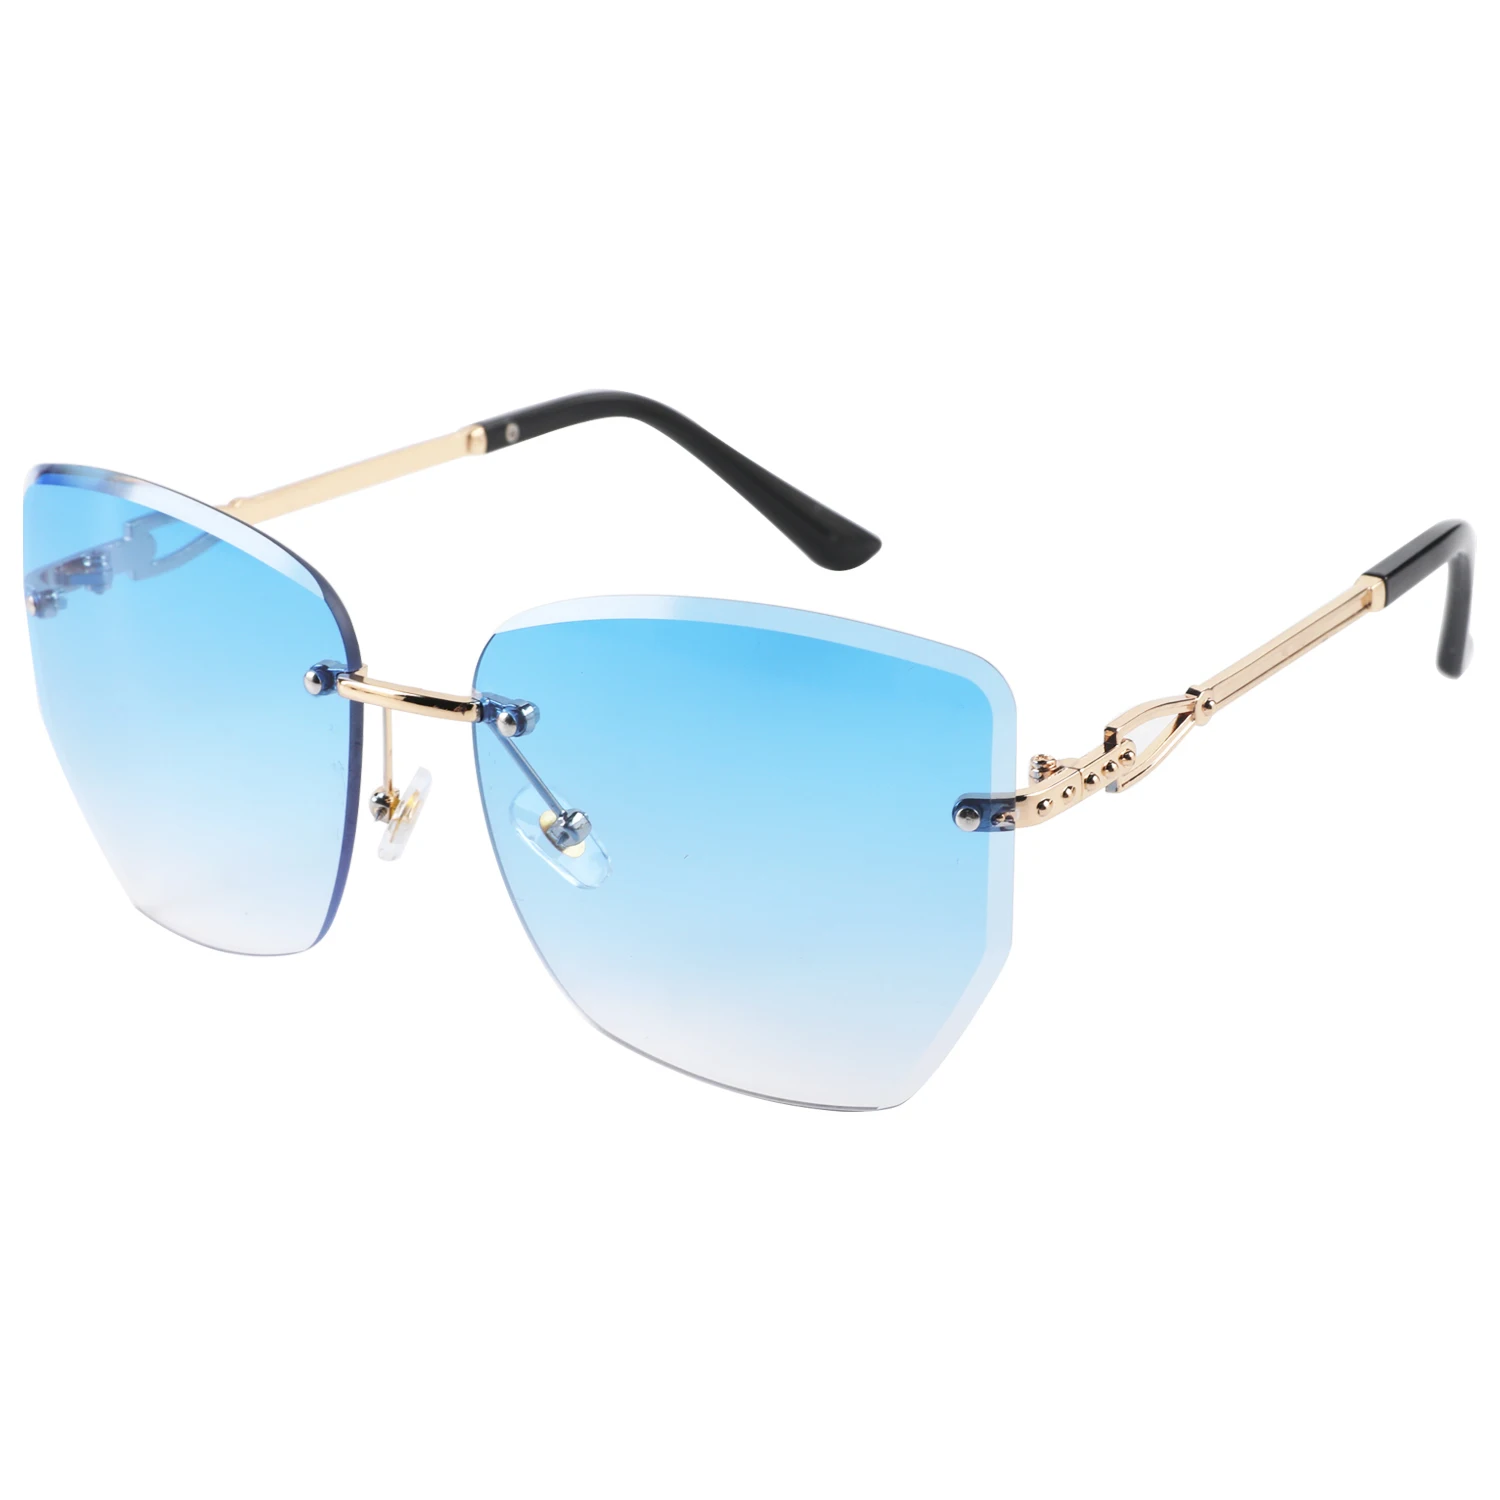 New Ins Sunglasses Female Trend Slimming Gm Diamond Cut Edge Sunglasses ...